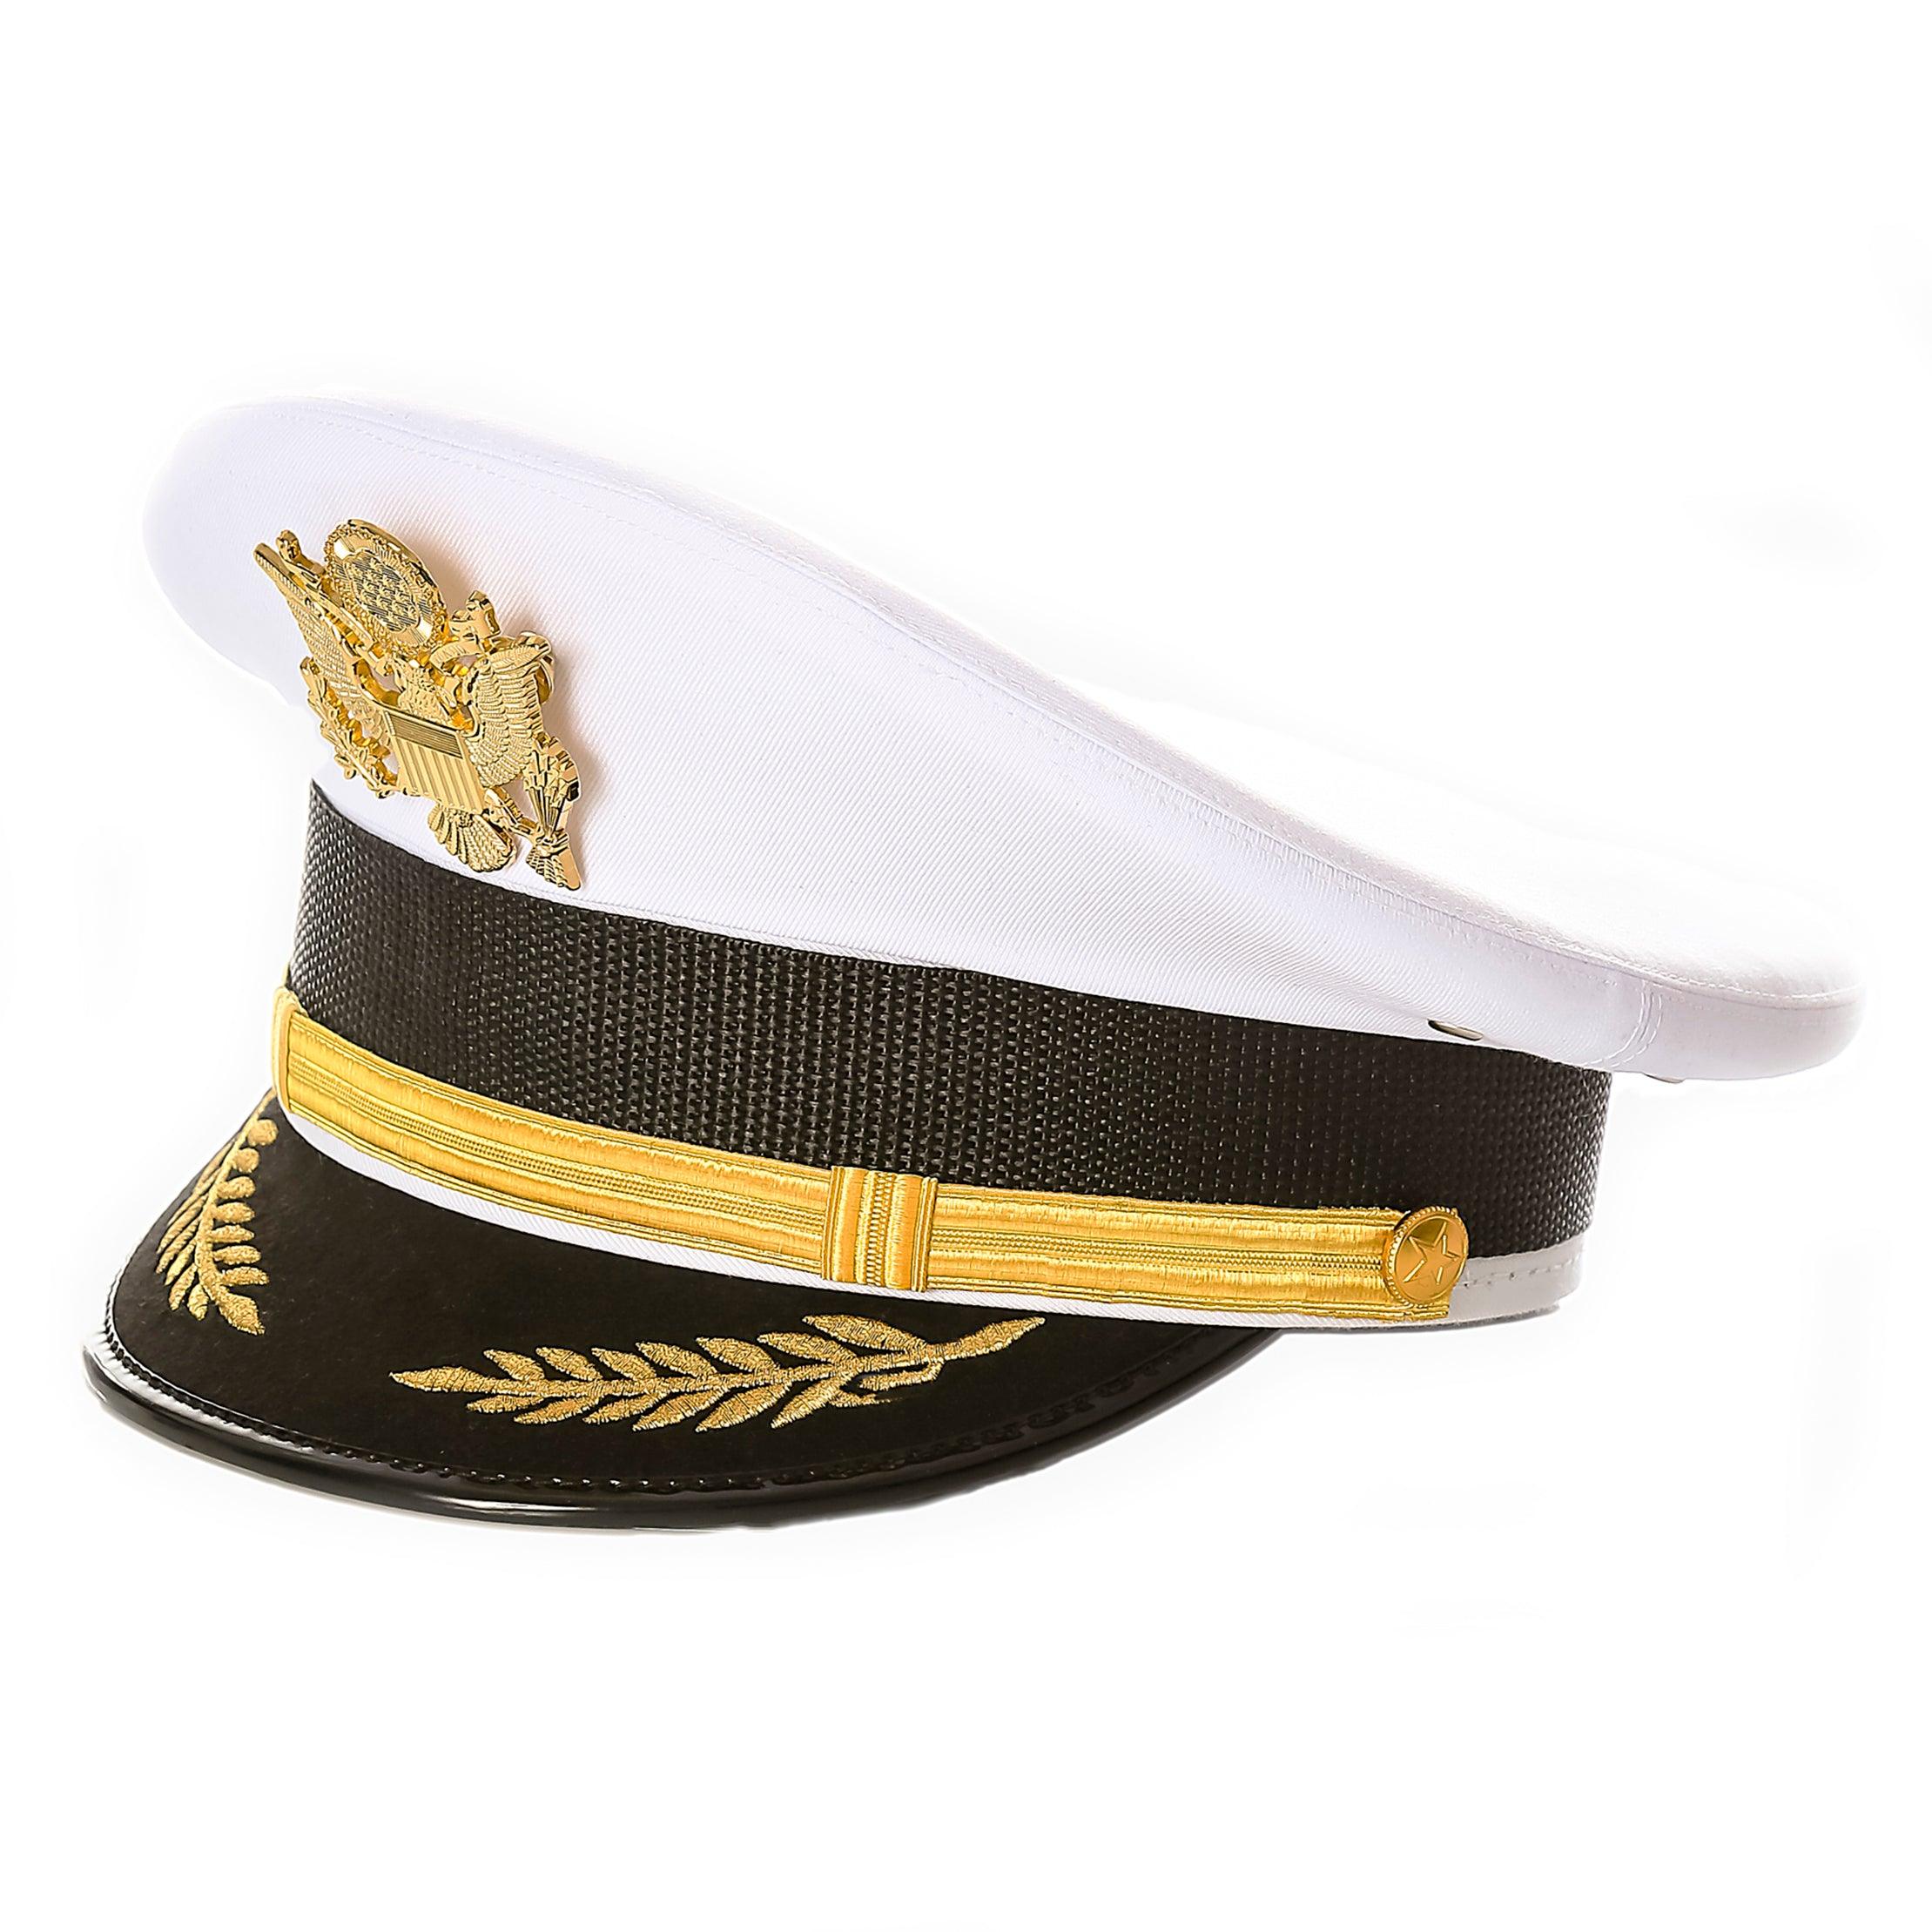 Ferrecci White Military Cadet Captain Sailor Hat Large